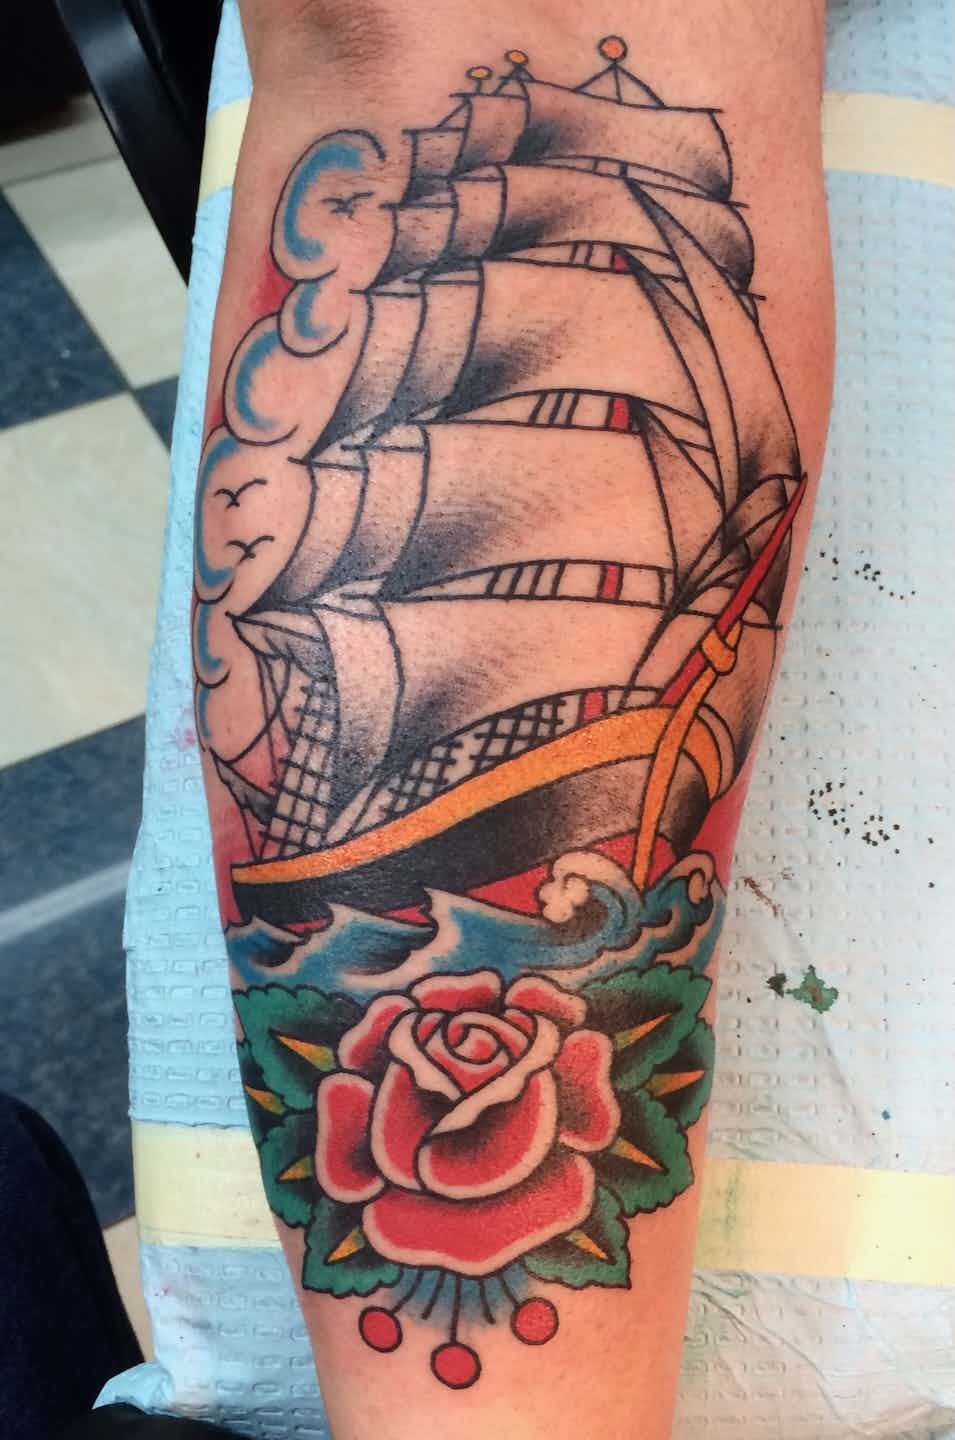 Ship rose tattoo